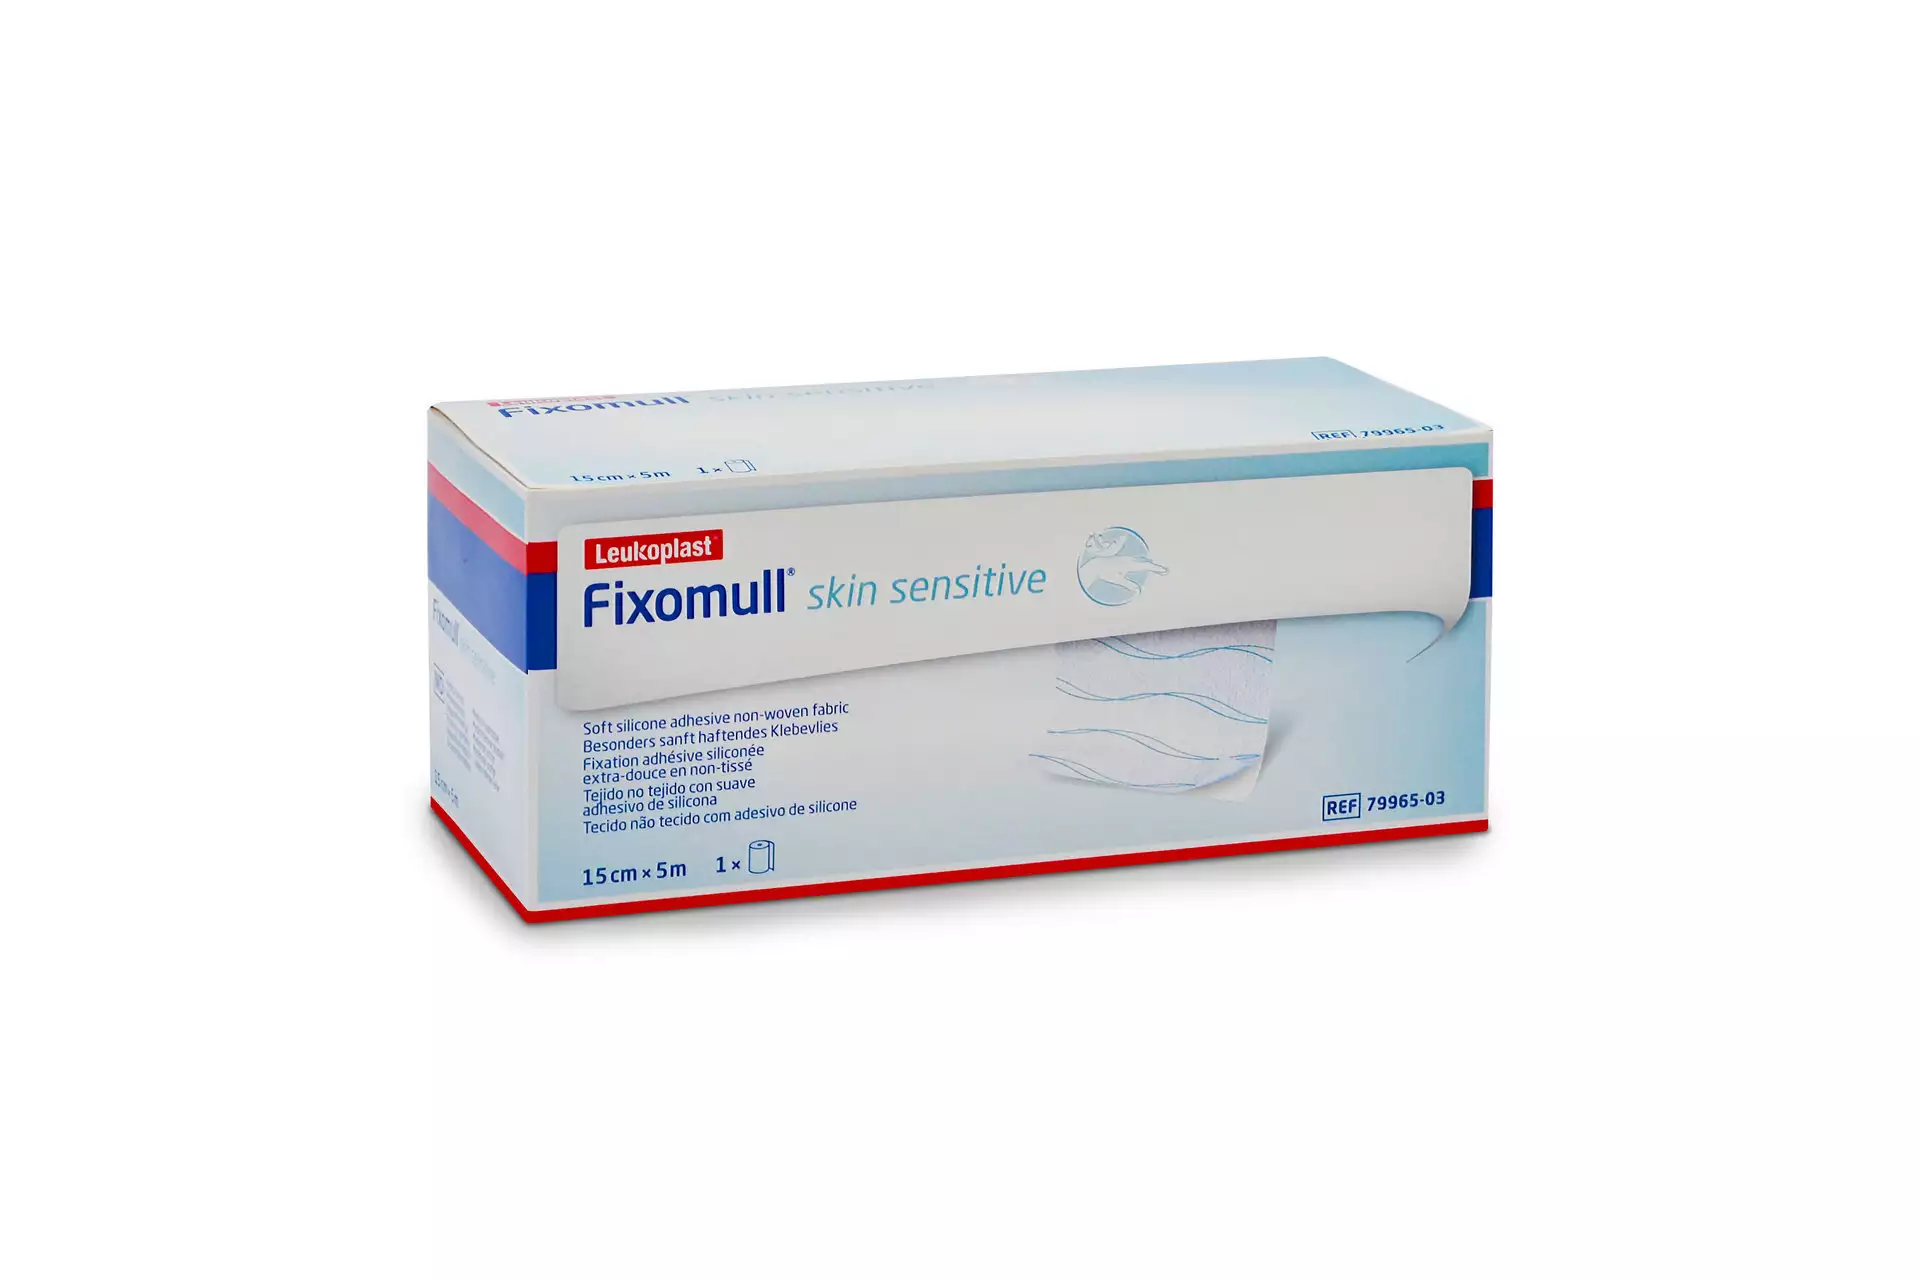 Fixomull Skin Sensitive 15cm x 5m Verband PZN 15190940